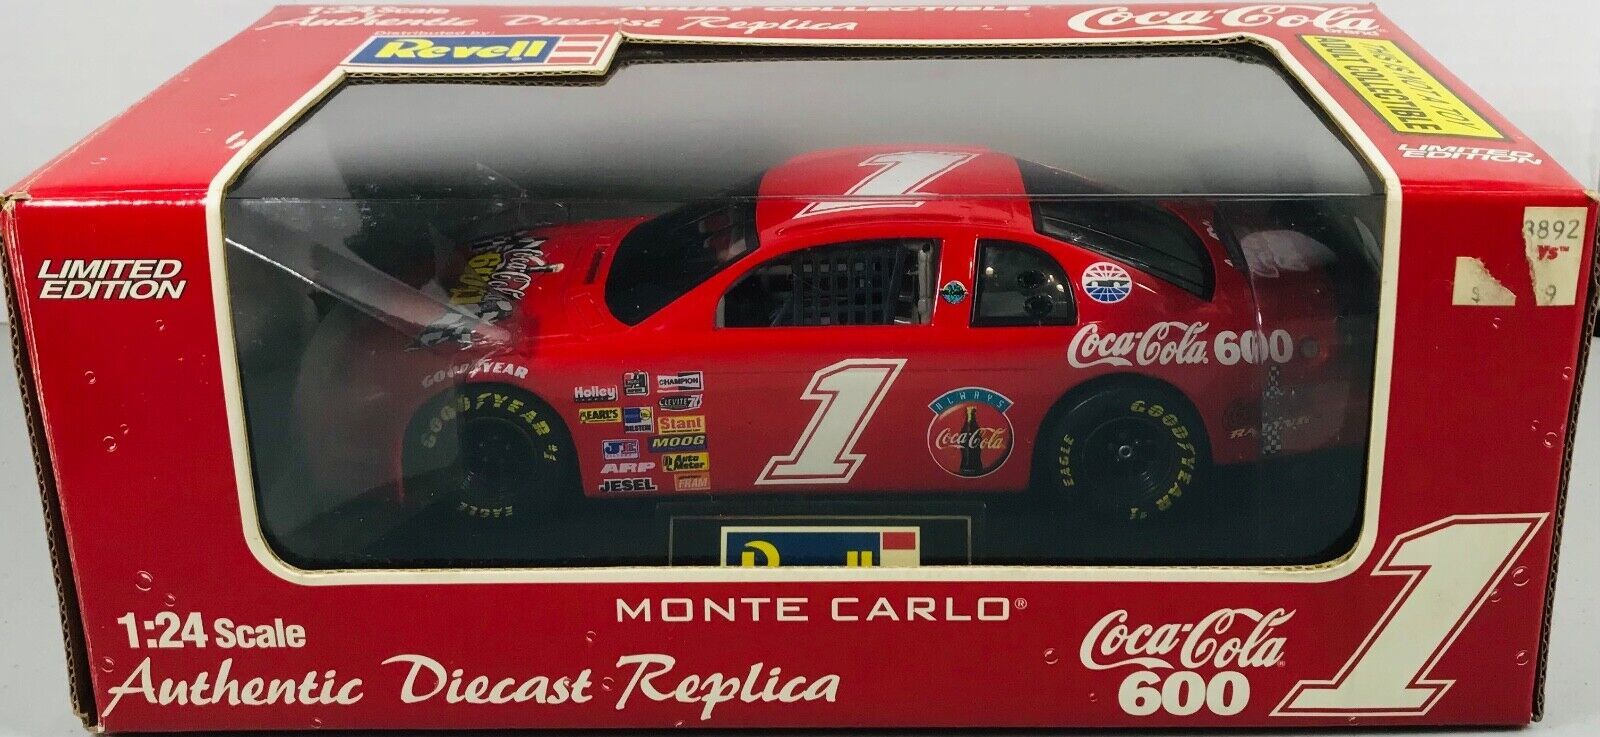 Primary image for Coca-Cola Authentic Monte Carlo 1/24 Scale Diecast Replica Revell Limited Ed.